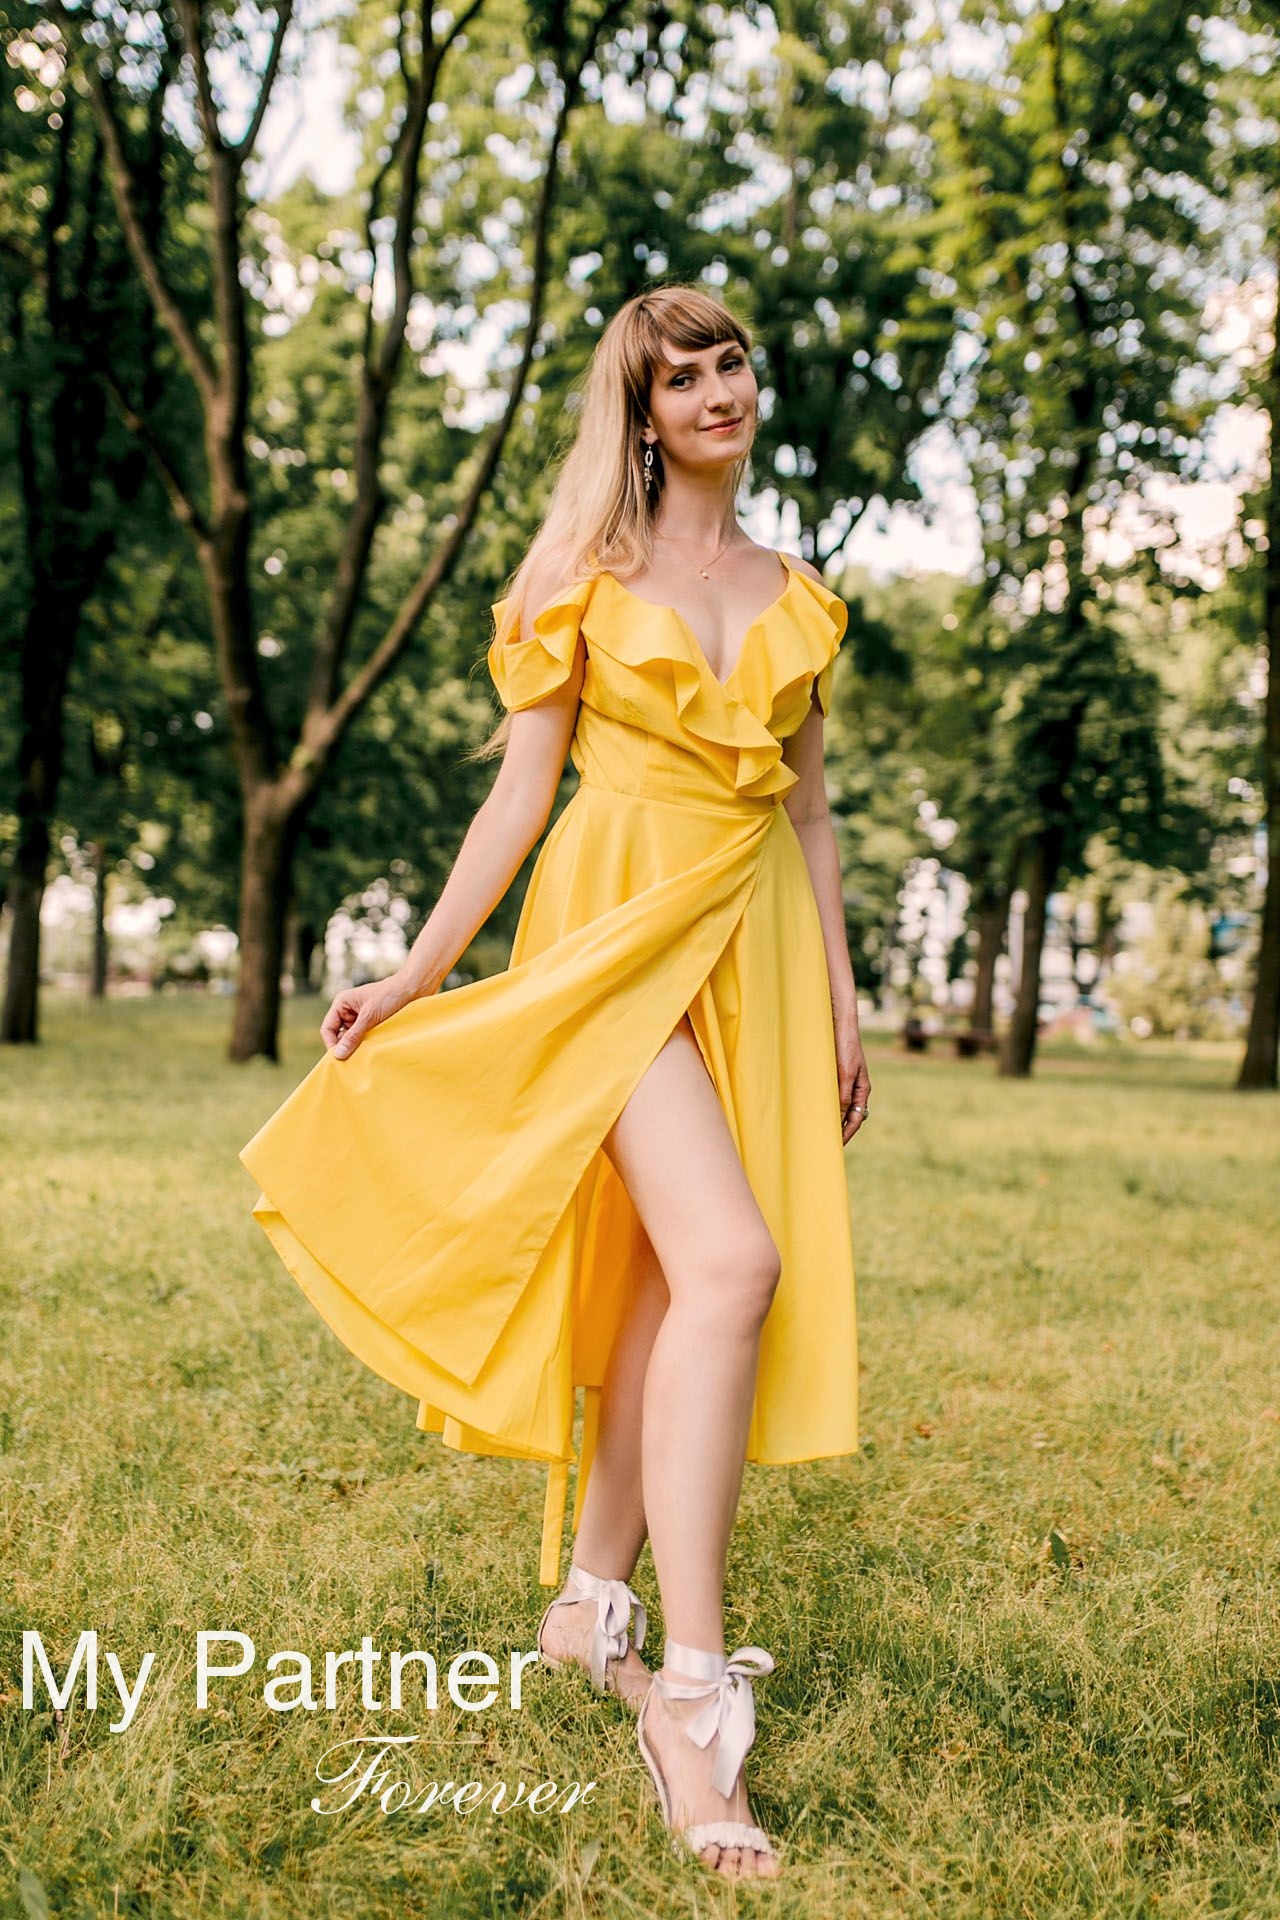 Meet Single Ukrainian Woman Kseniya from Cherkasy, Ukraine